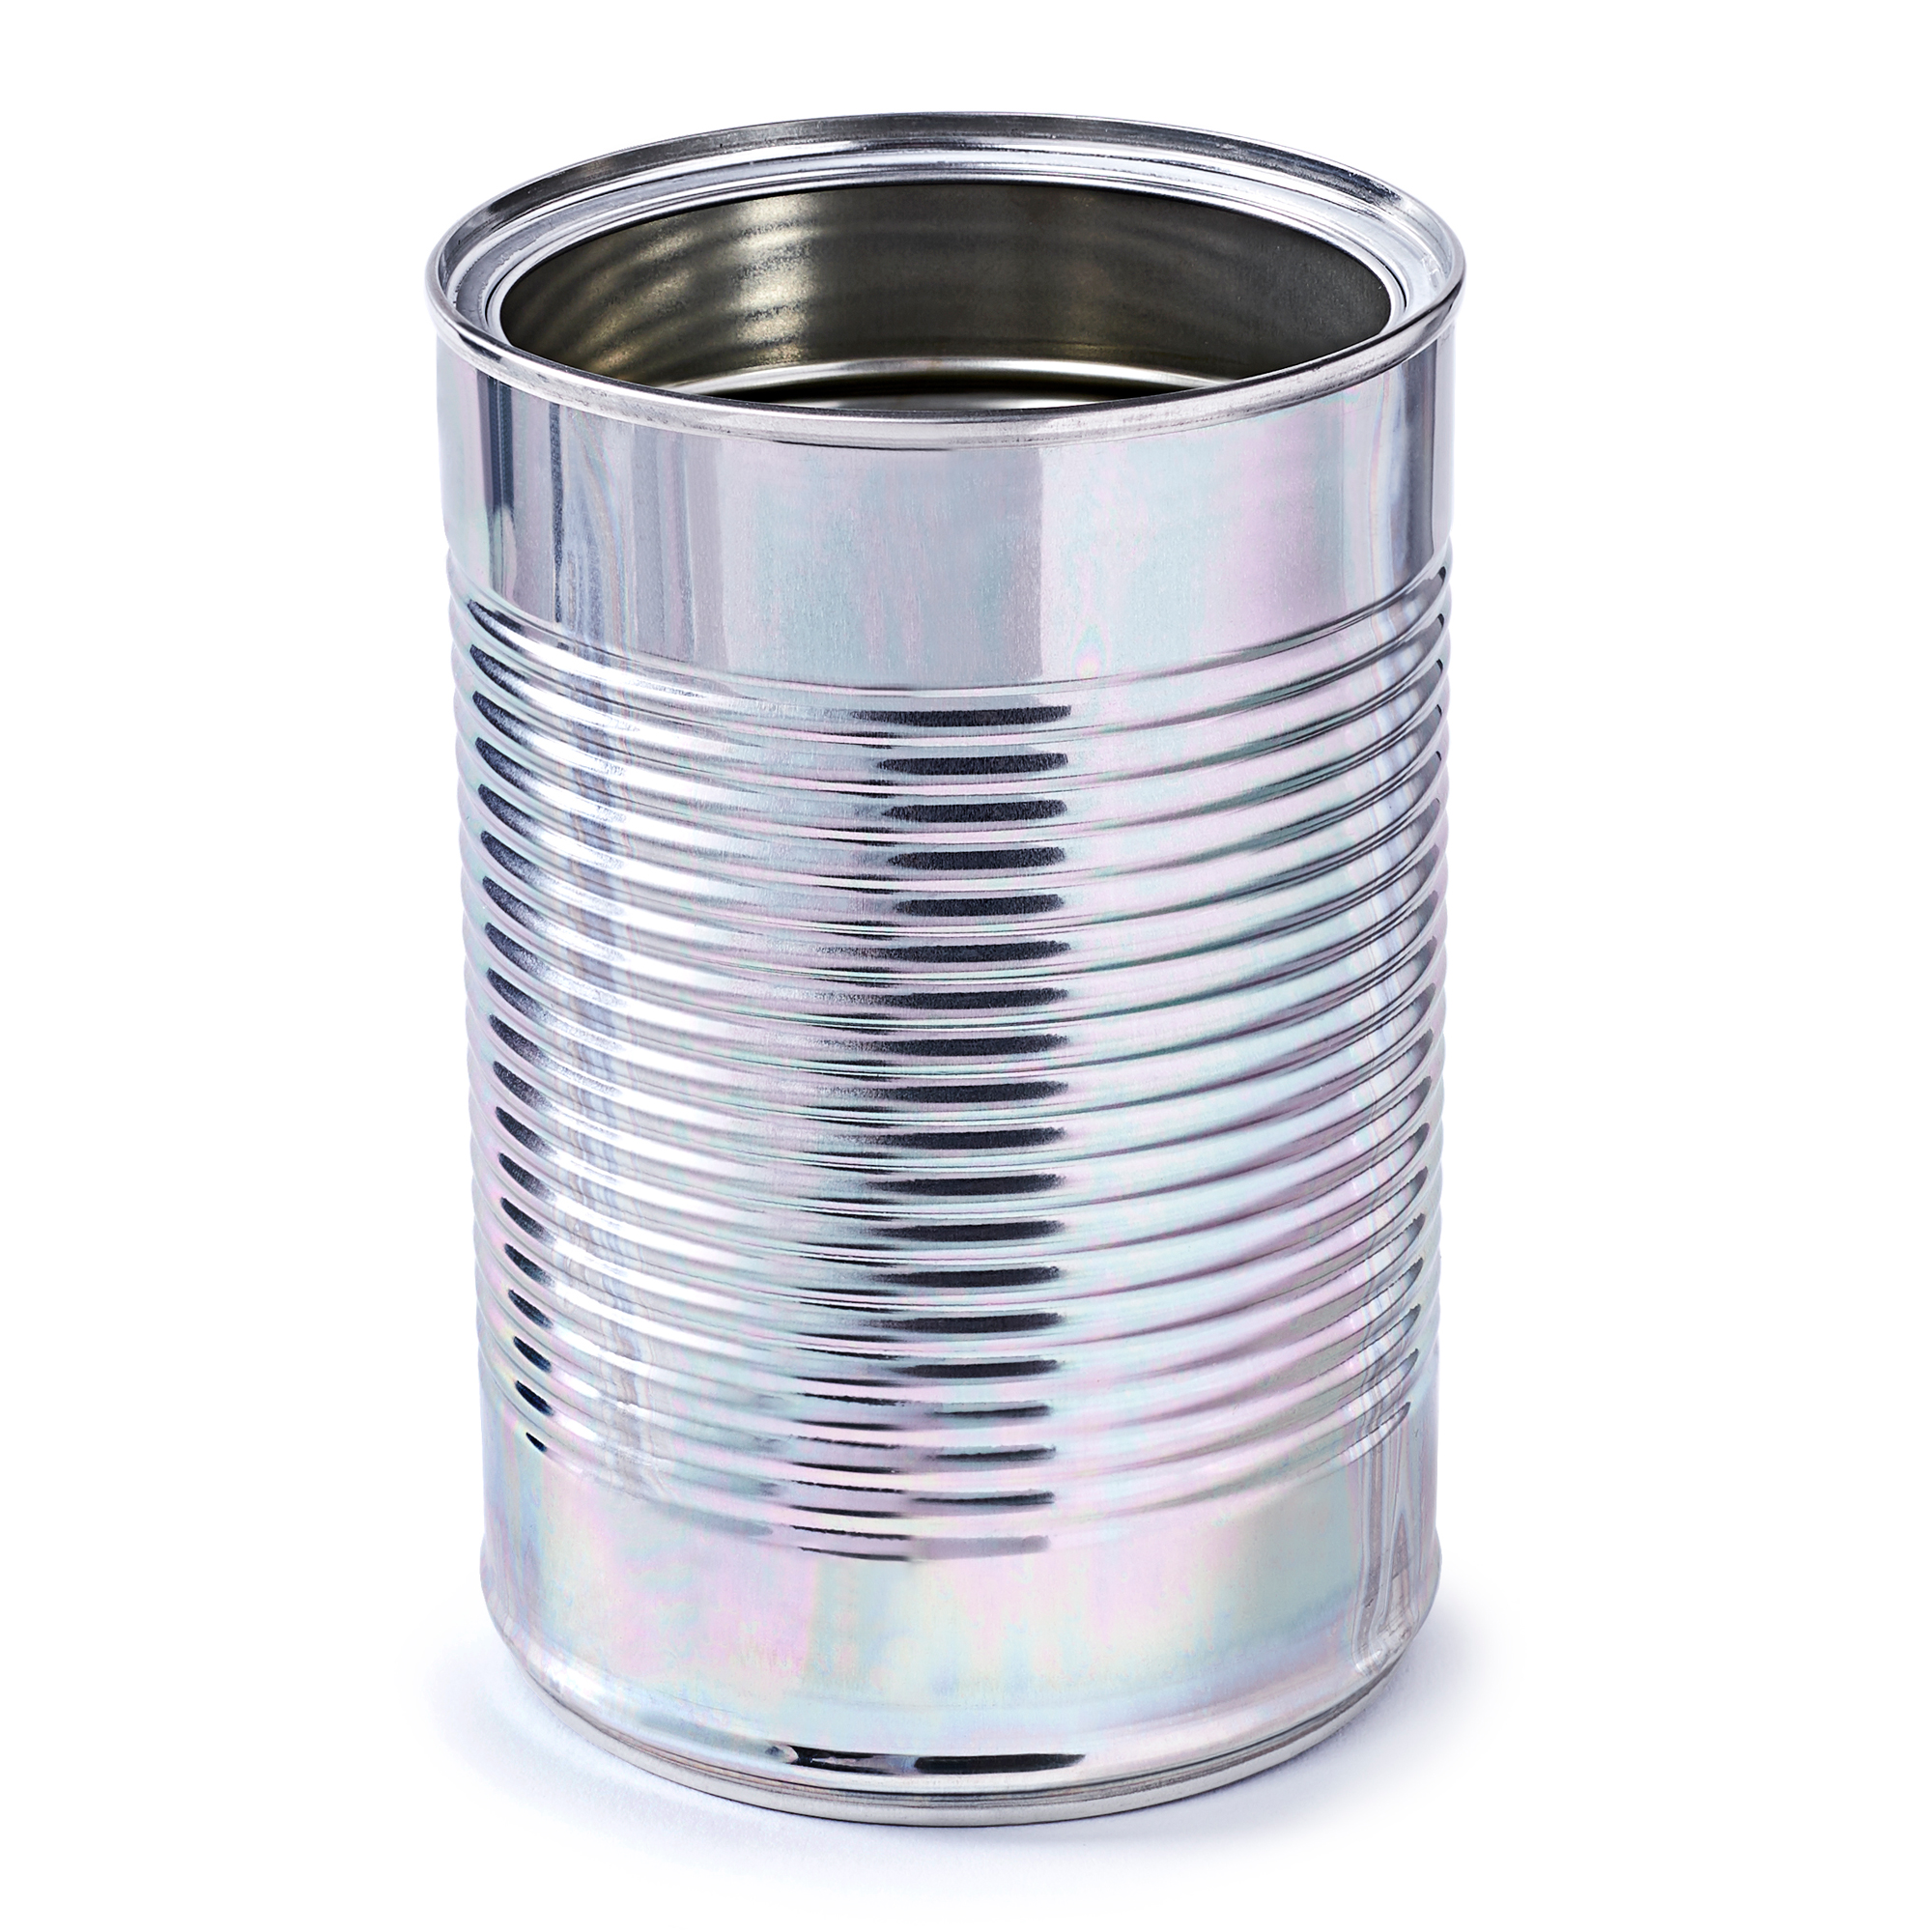 Tin cup. Tin can стакан h98 мм, 360 мл. Консервные банки качественные. Tin 2508133212.